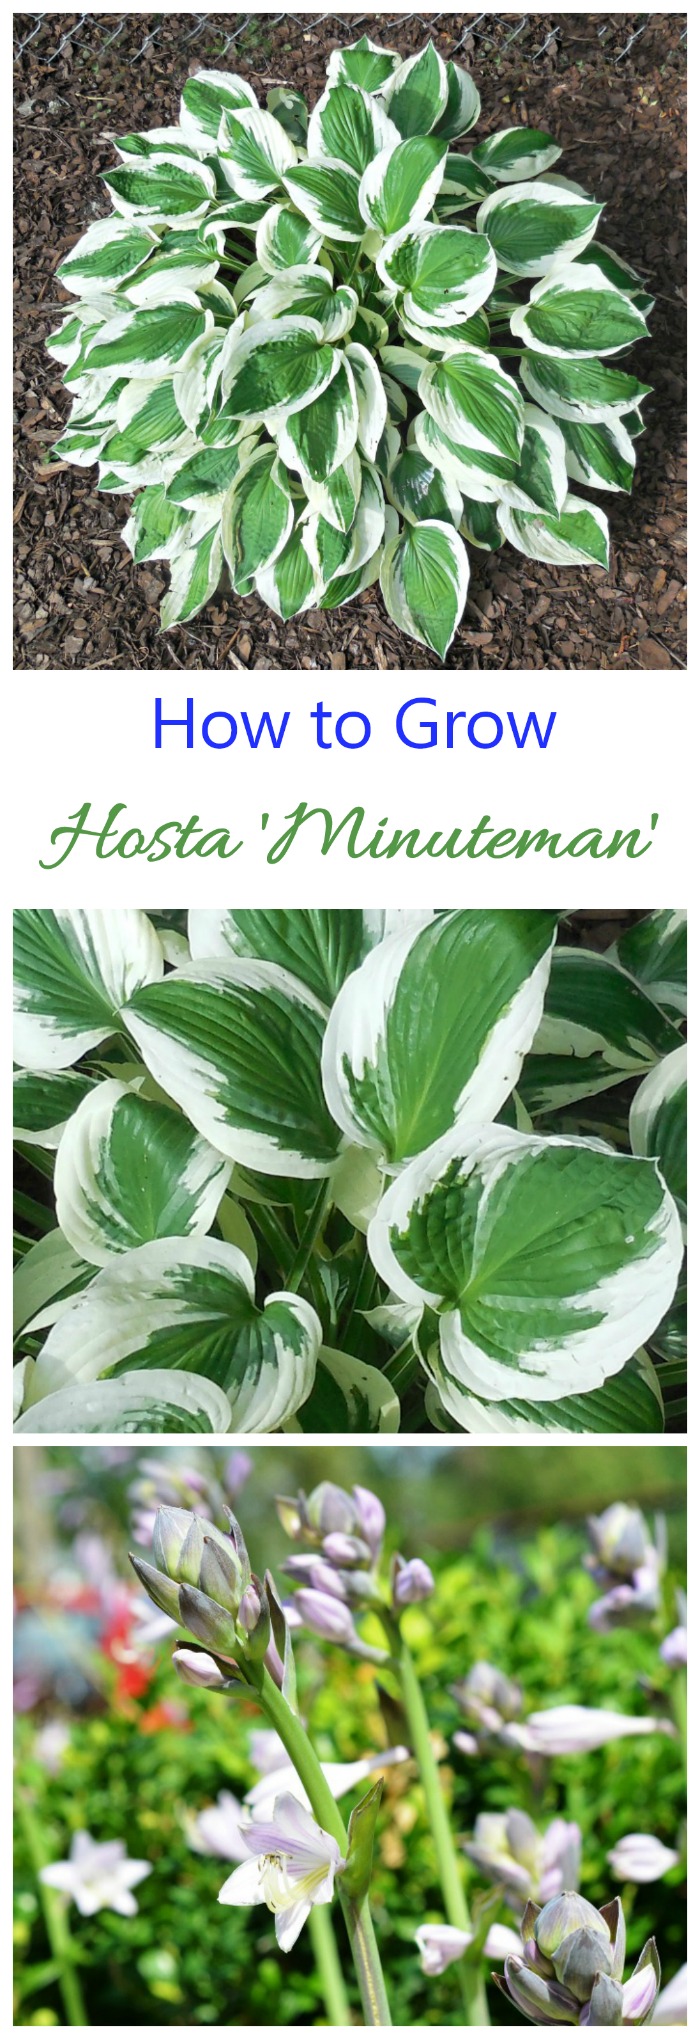 Hosta Minuteman - Συμβουλές για την καλλιέργεια Plantain Lily